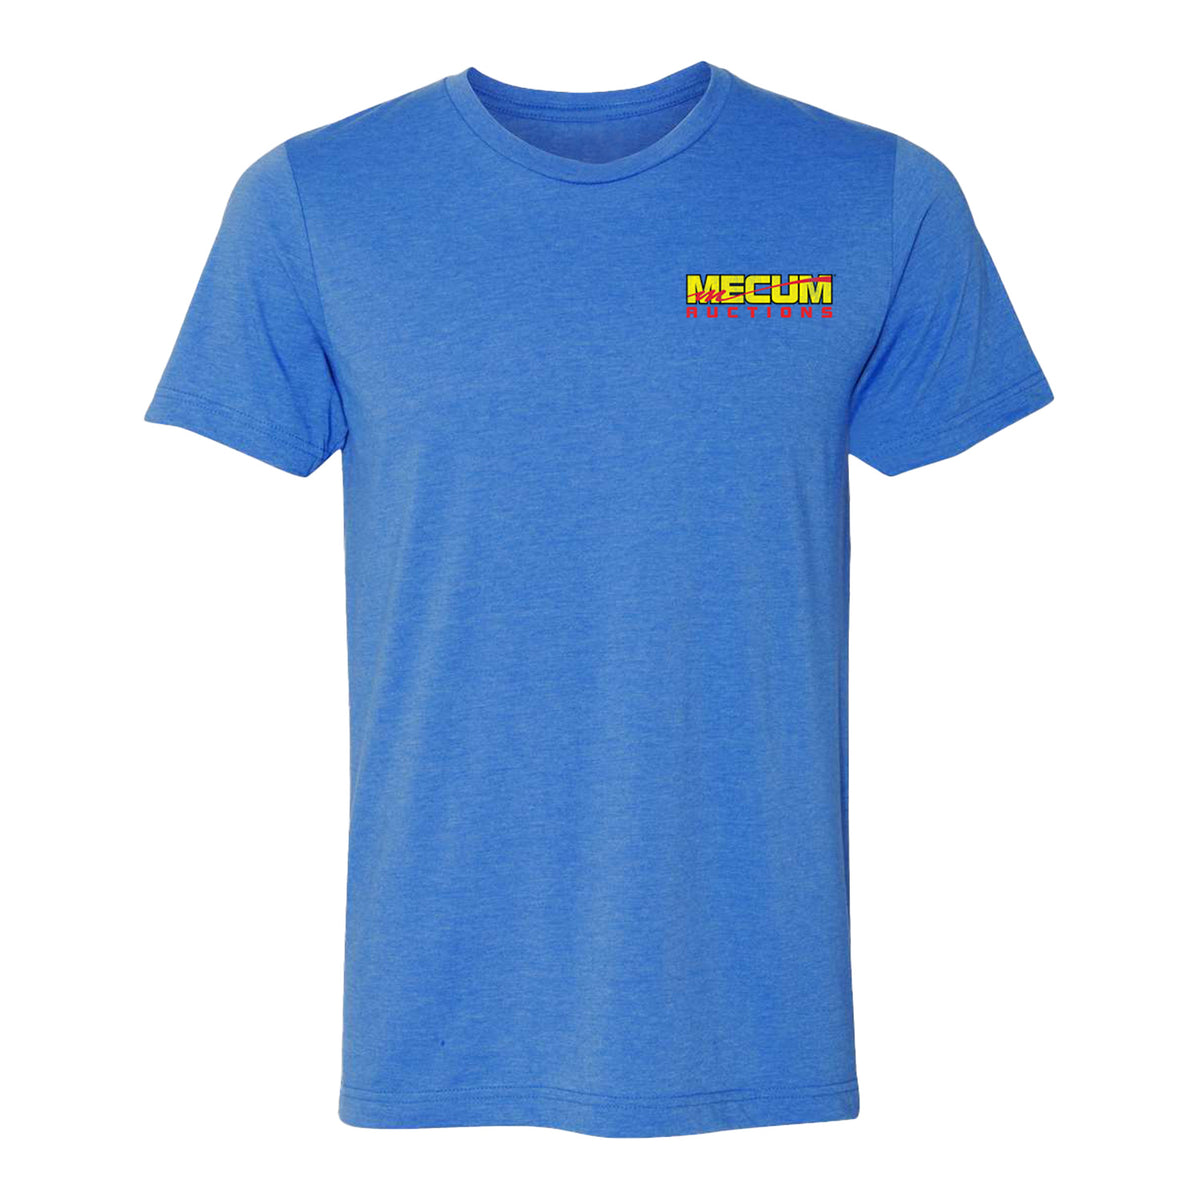 Mecum Auctions Heather Royal Car Design T-Shirt in Blue - Front View